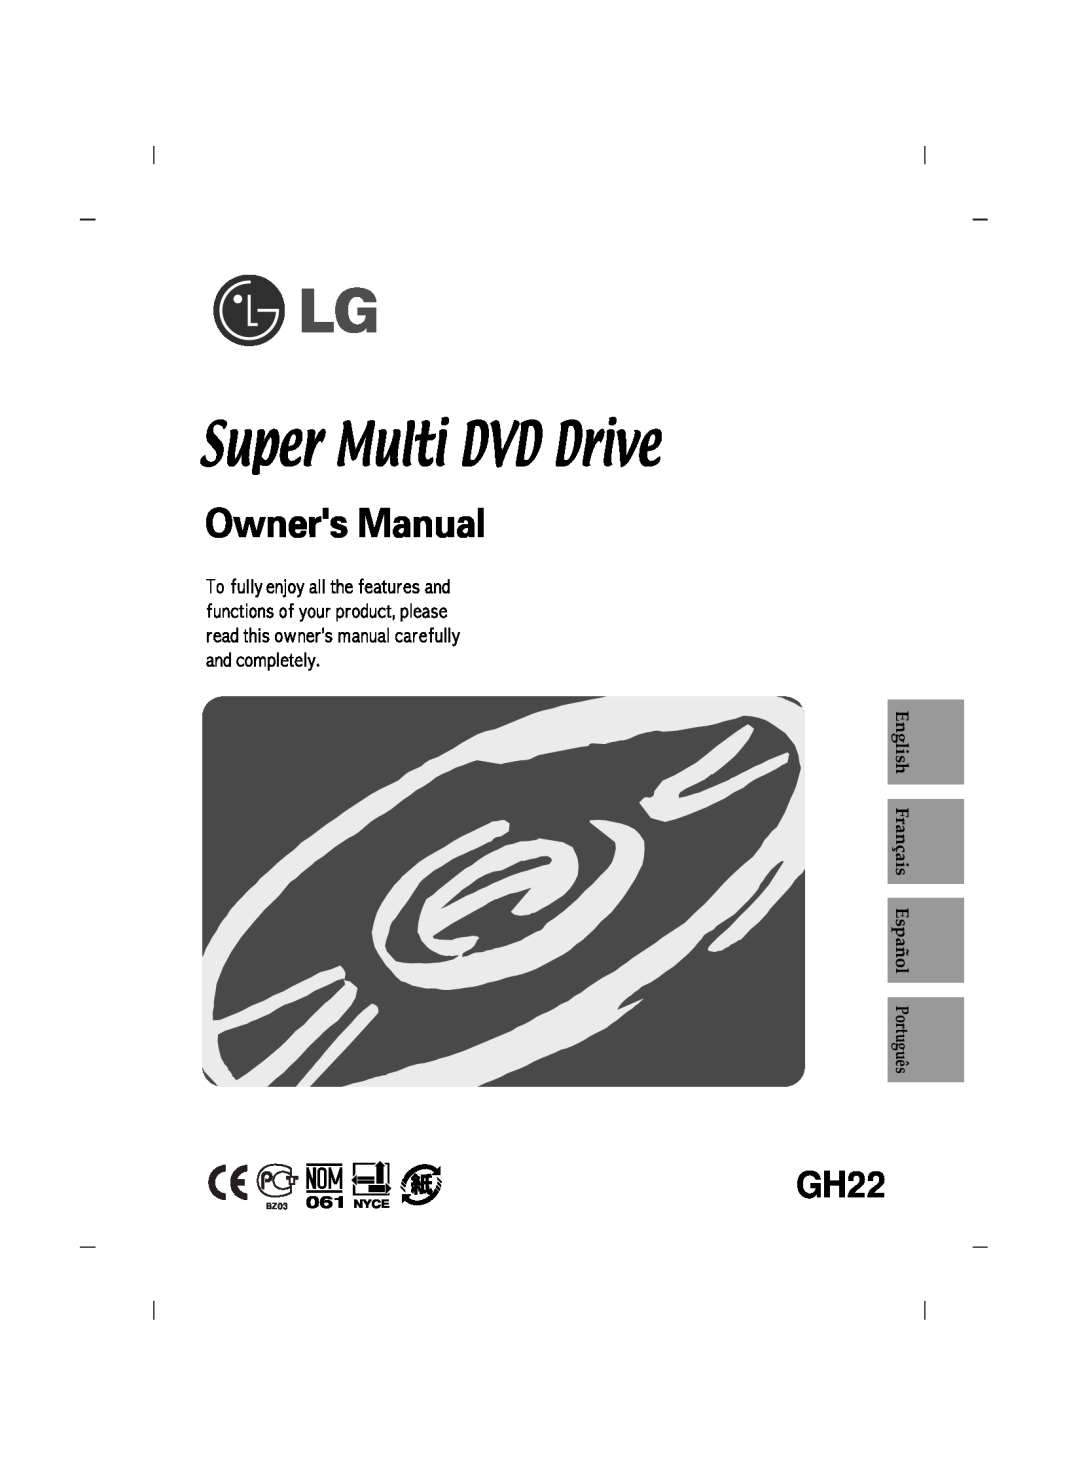 LG Electronics GH22 manual English Français Español Português, Super Multi DVD Drive 